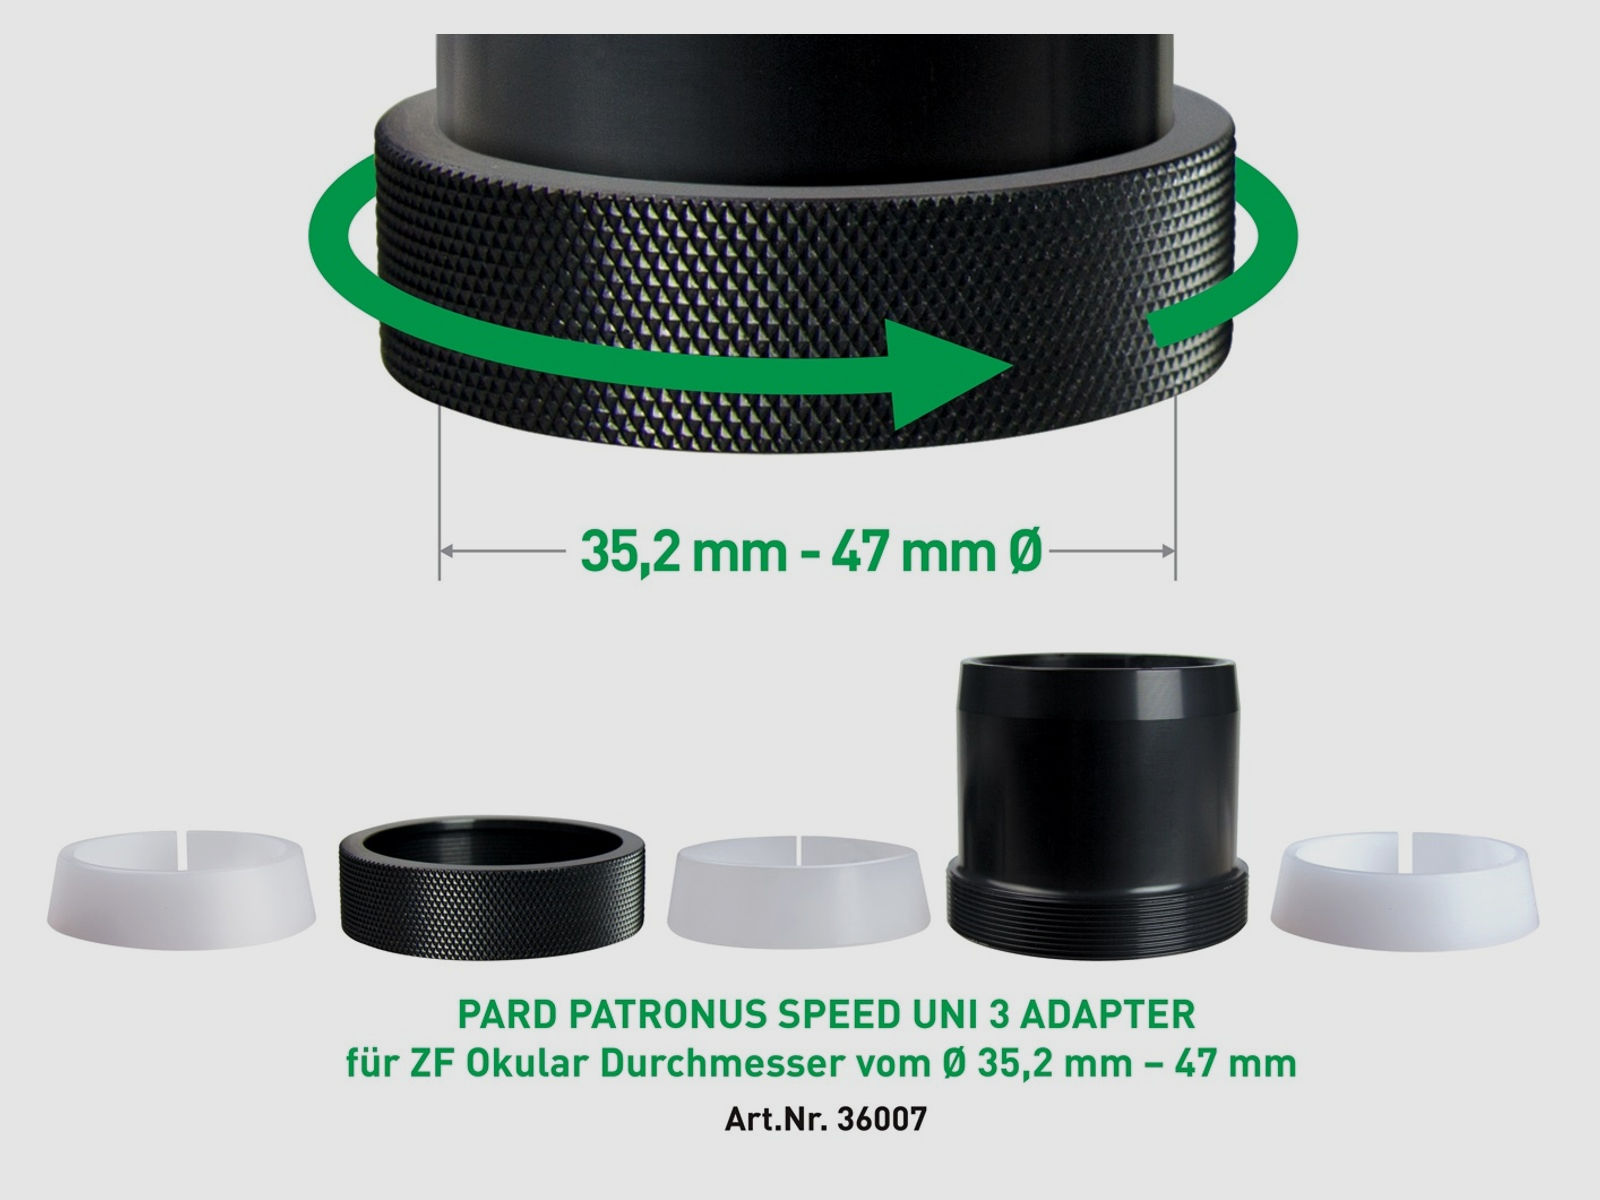 Universal Klemmadapter Uni Speed 3 Adapter PARD - Patronus 35,2-47mm